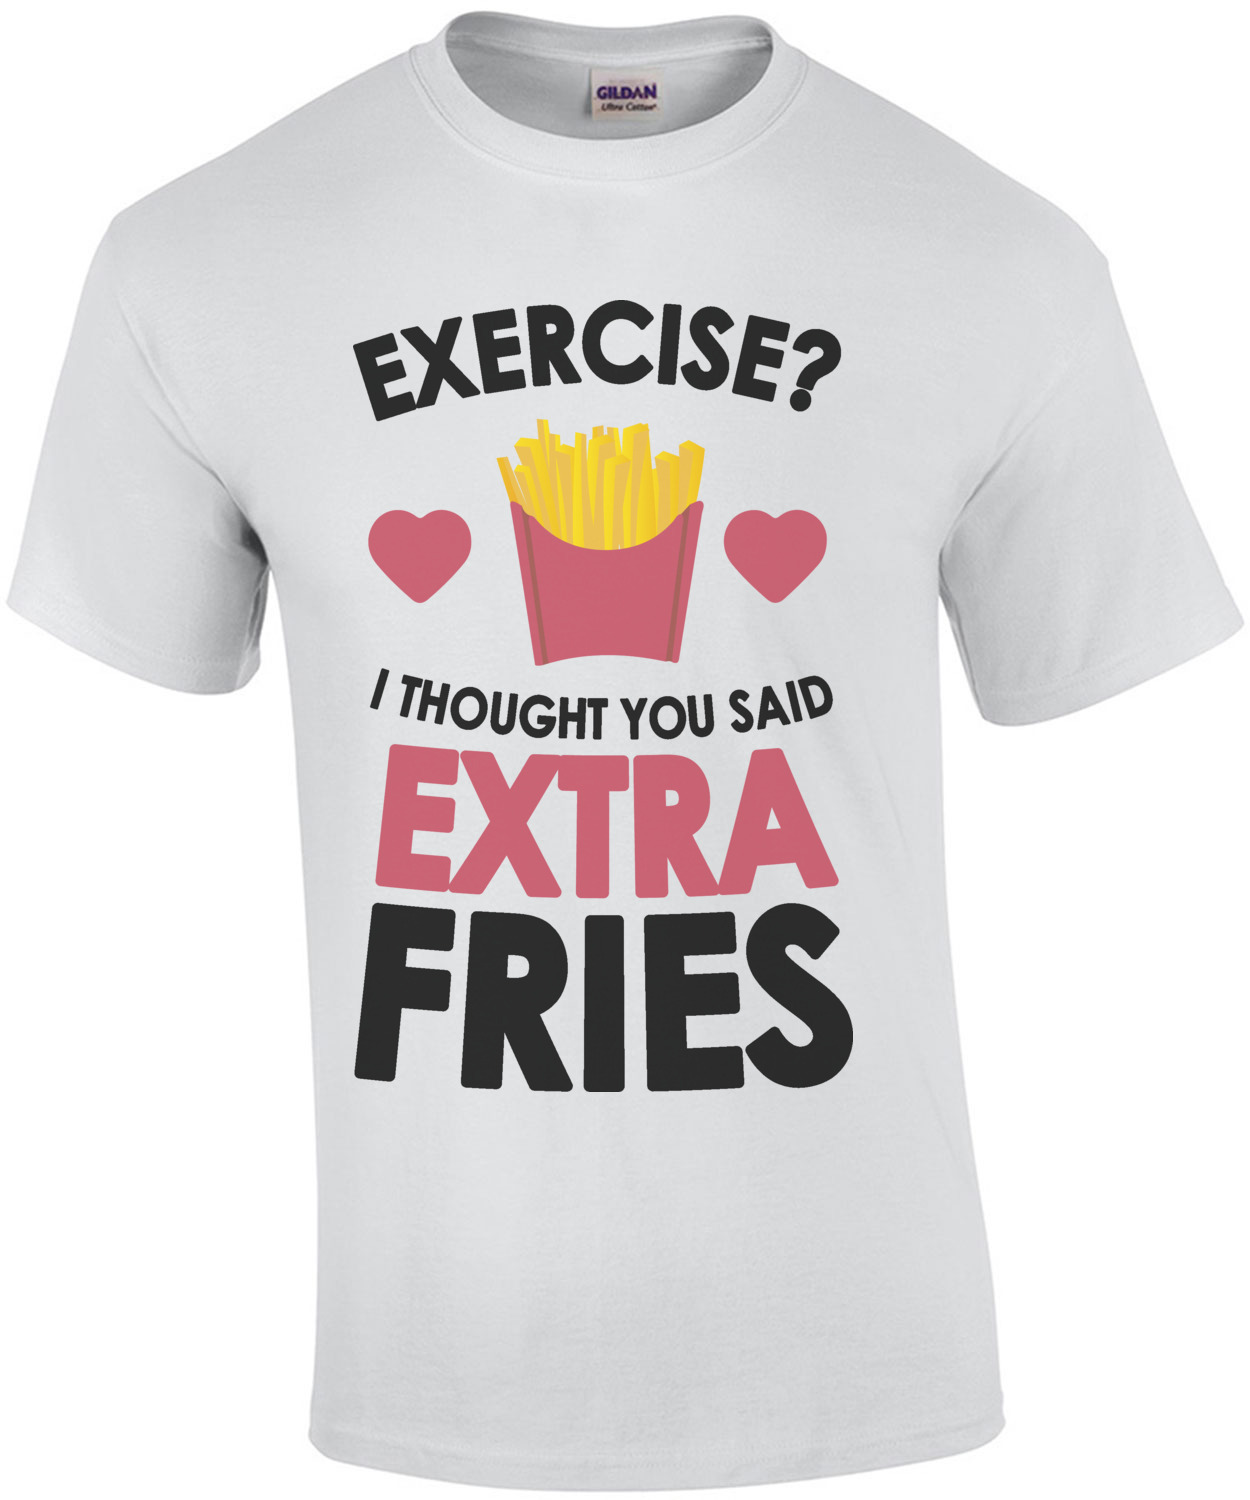 Exercise? I thought you said extra fries. shirt